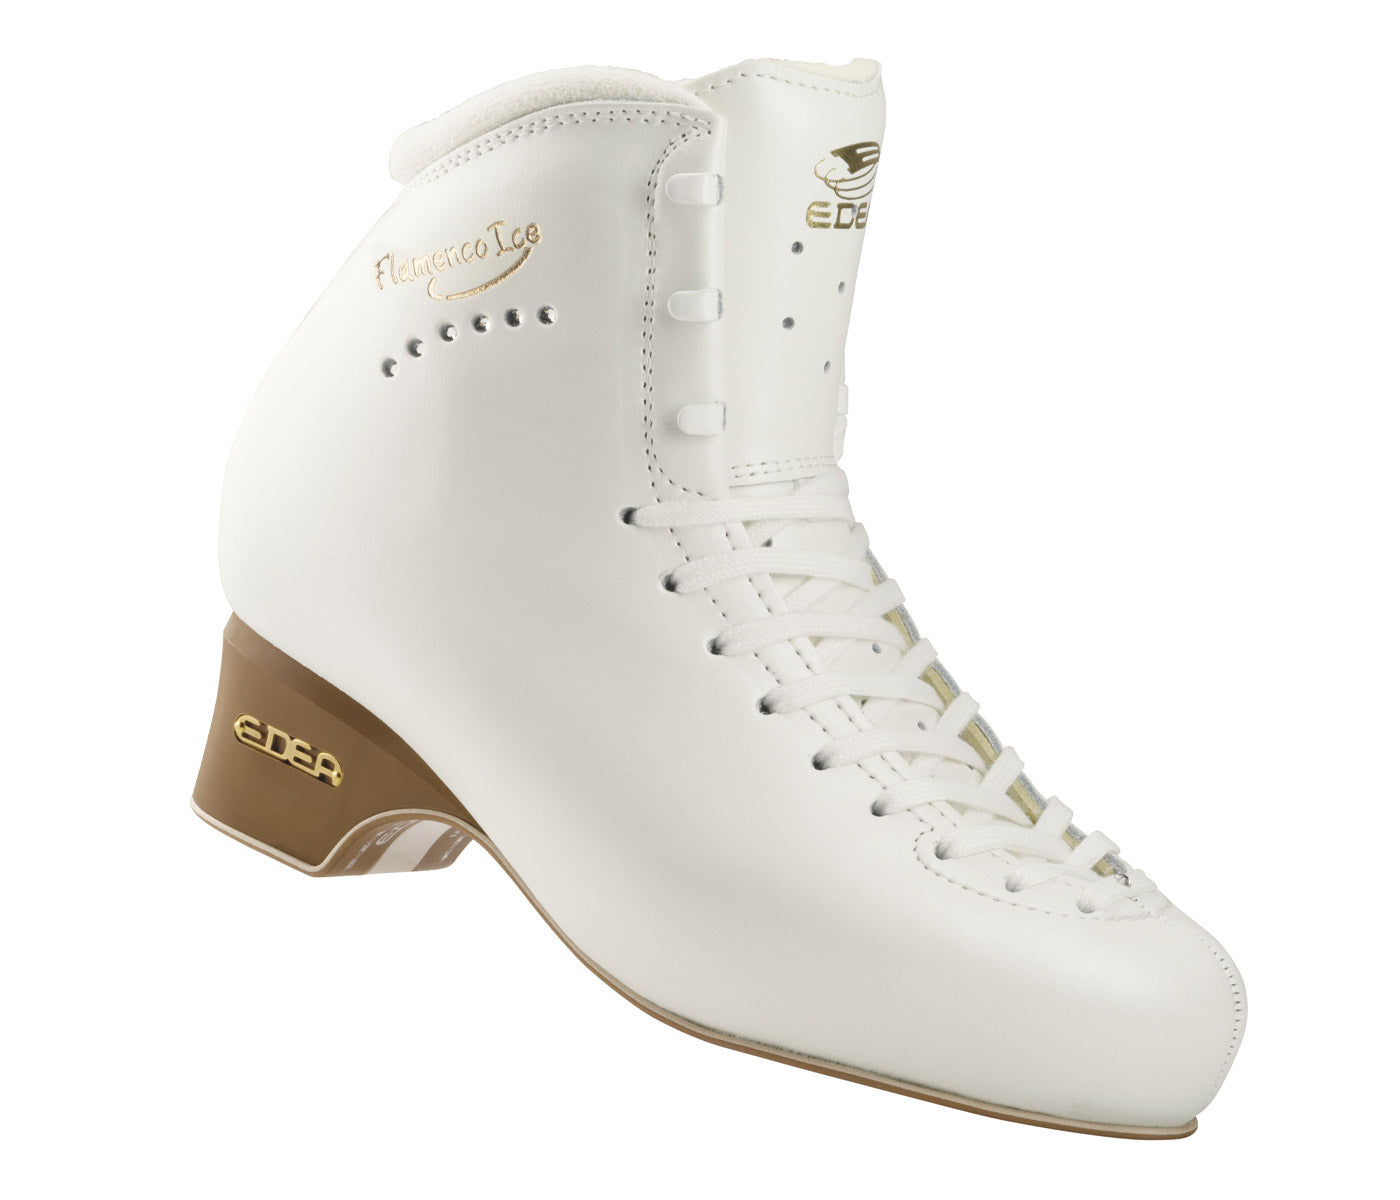 Edea Flamenco Ice Boot Only in Ivory. Senior Sizes 260 - 290